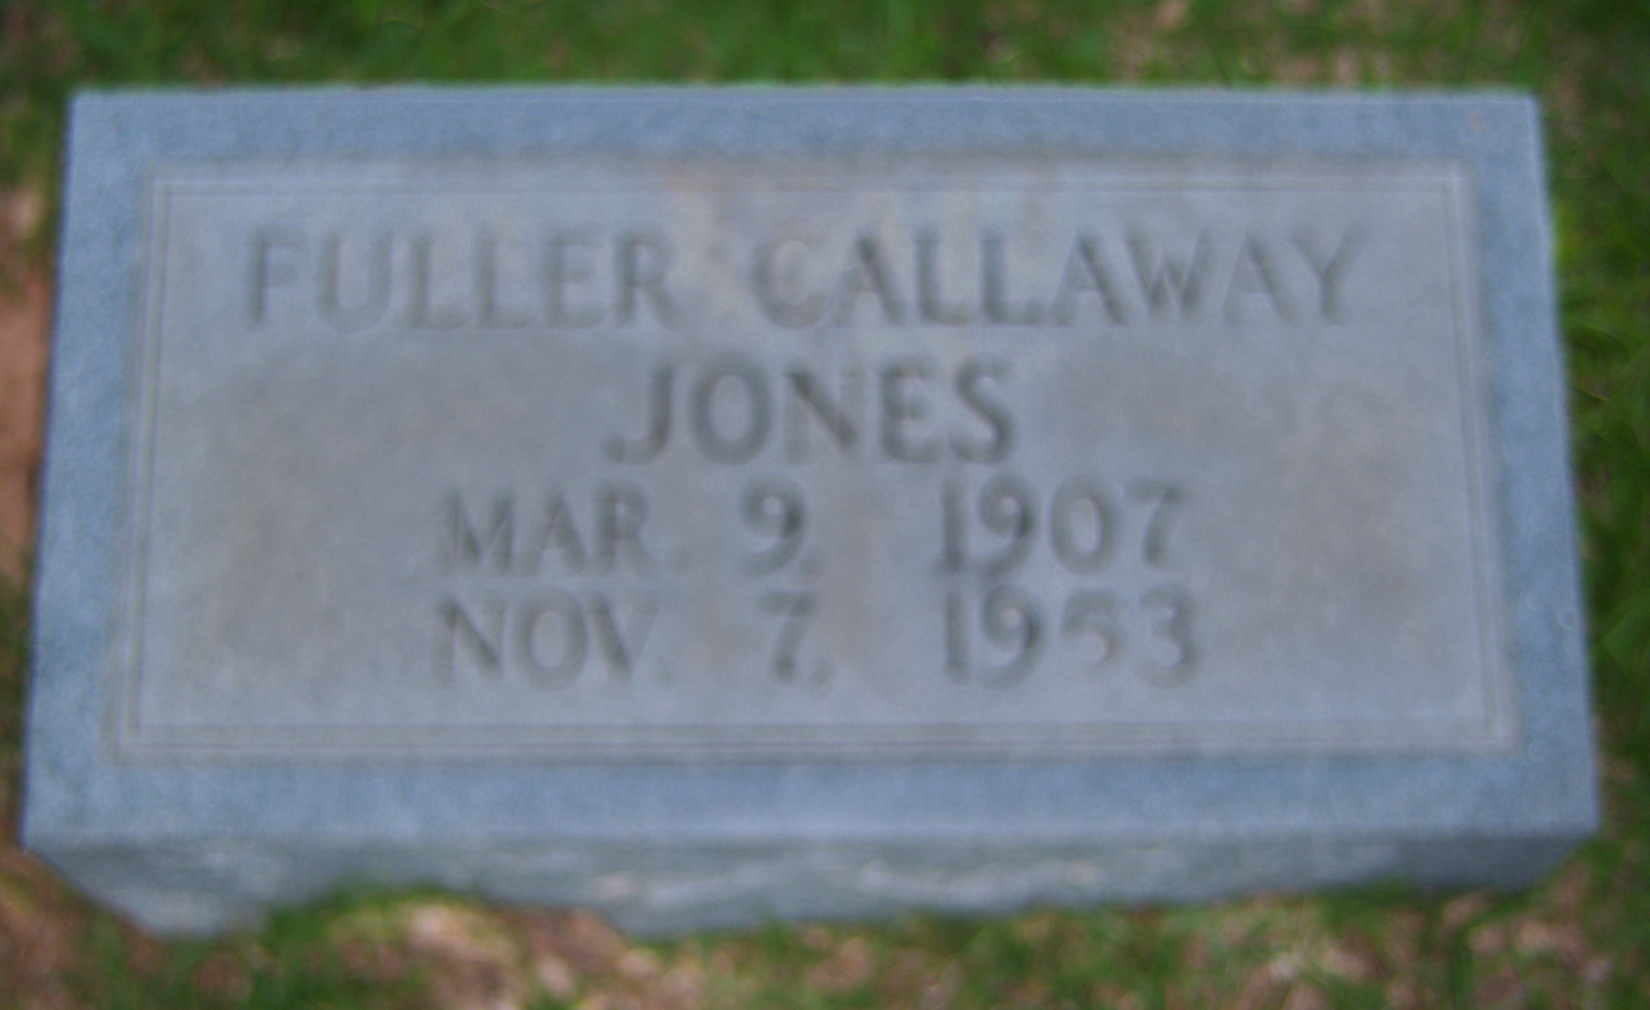 FullerCallowayJones gravestoneScaled